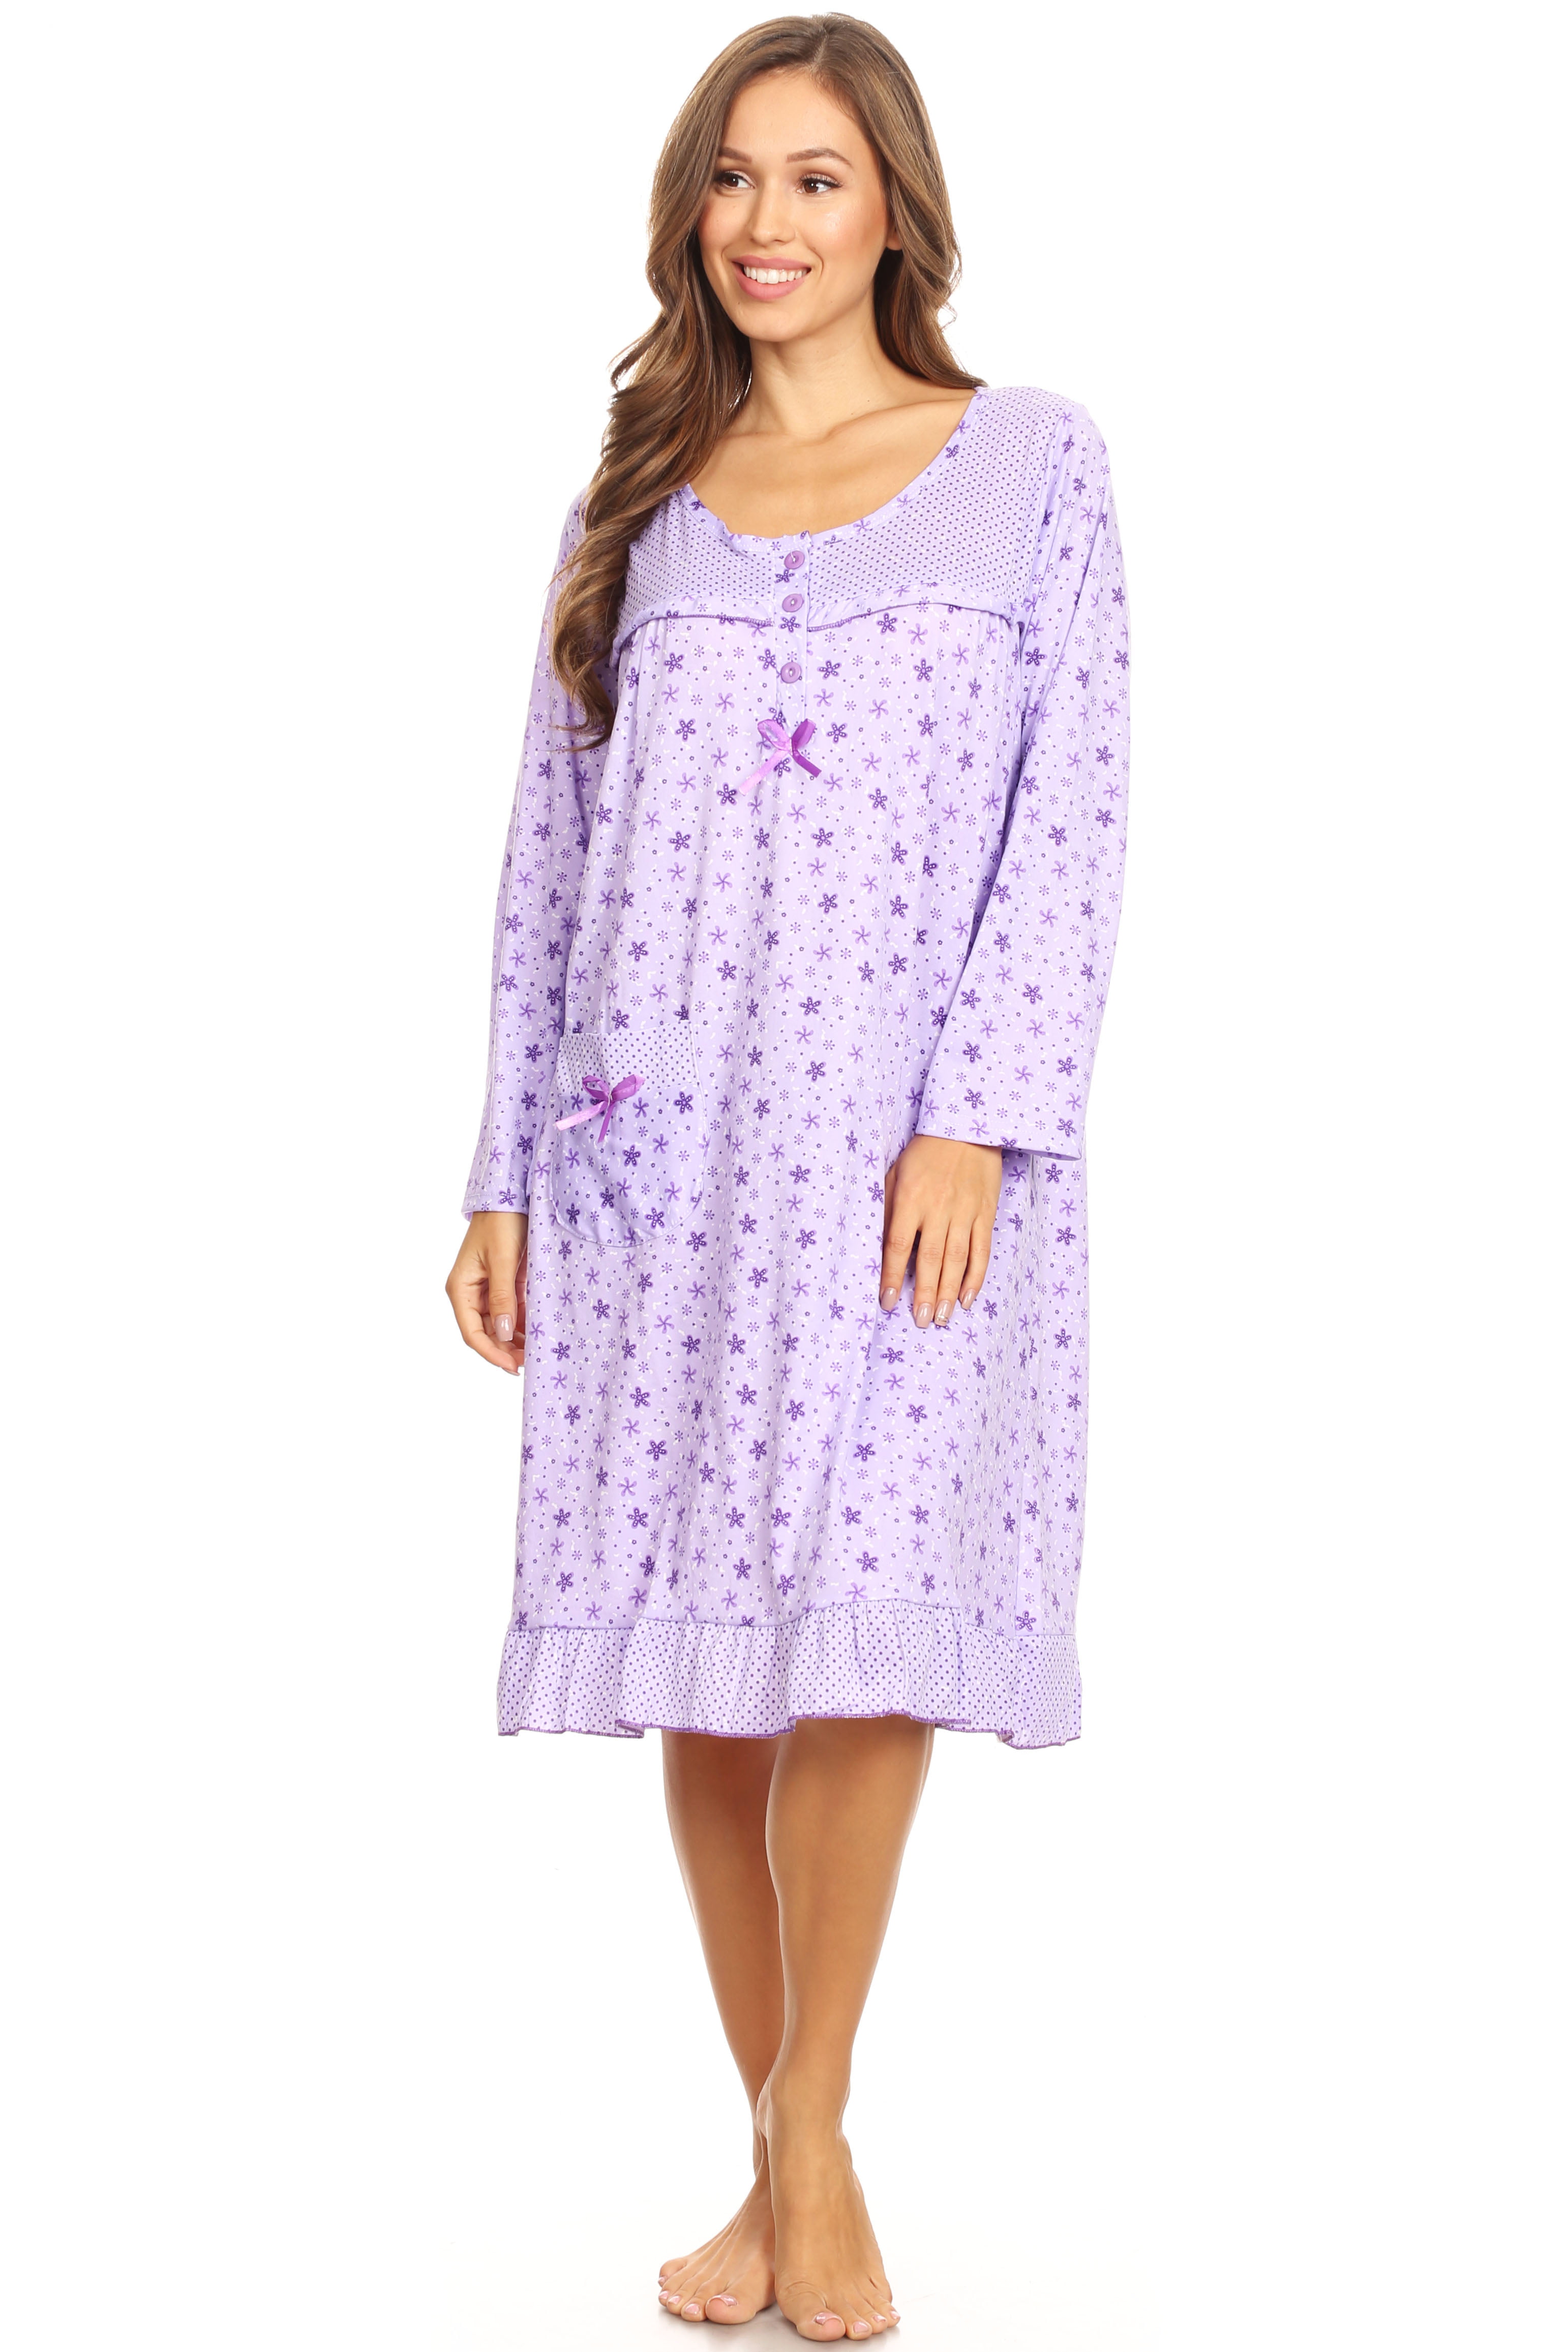 6009 Womens Nightgown Sleepwear Pajamas Woman Long Sleeve Sleep Dress ...